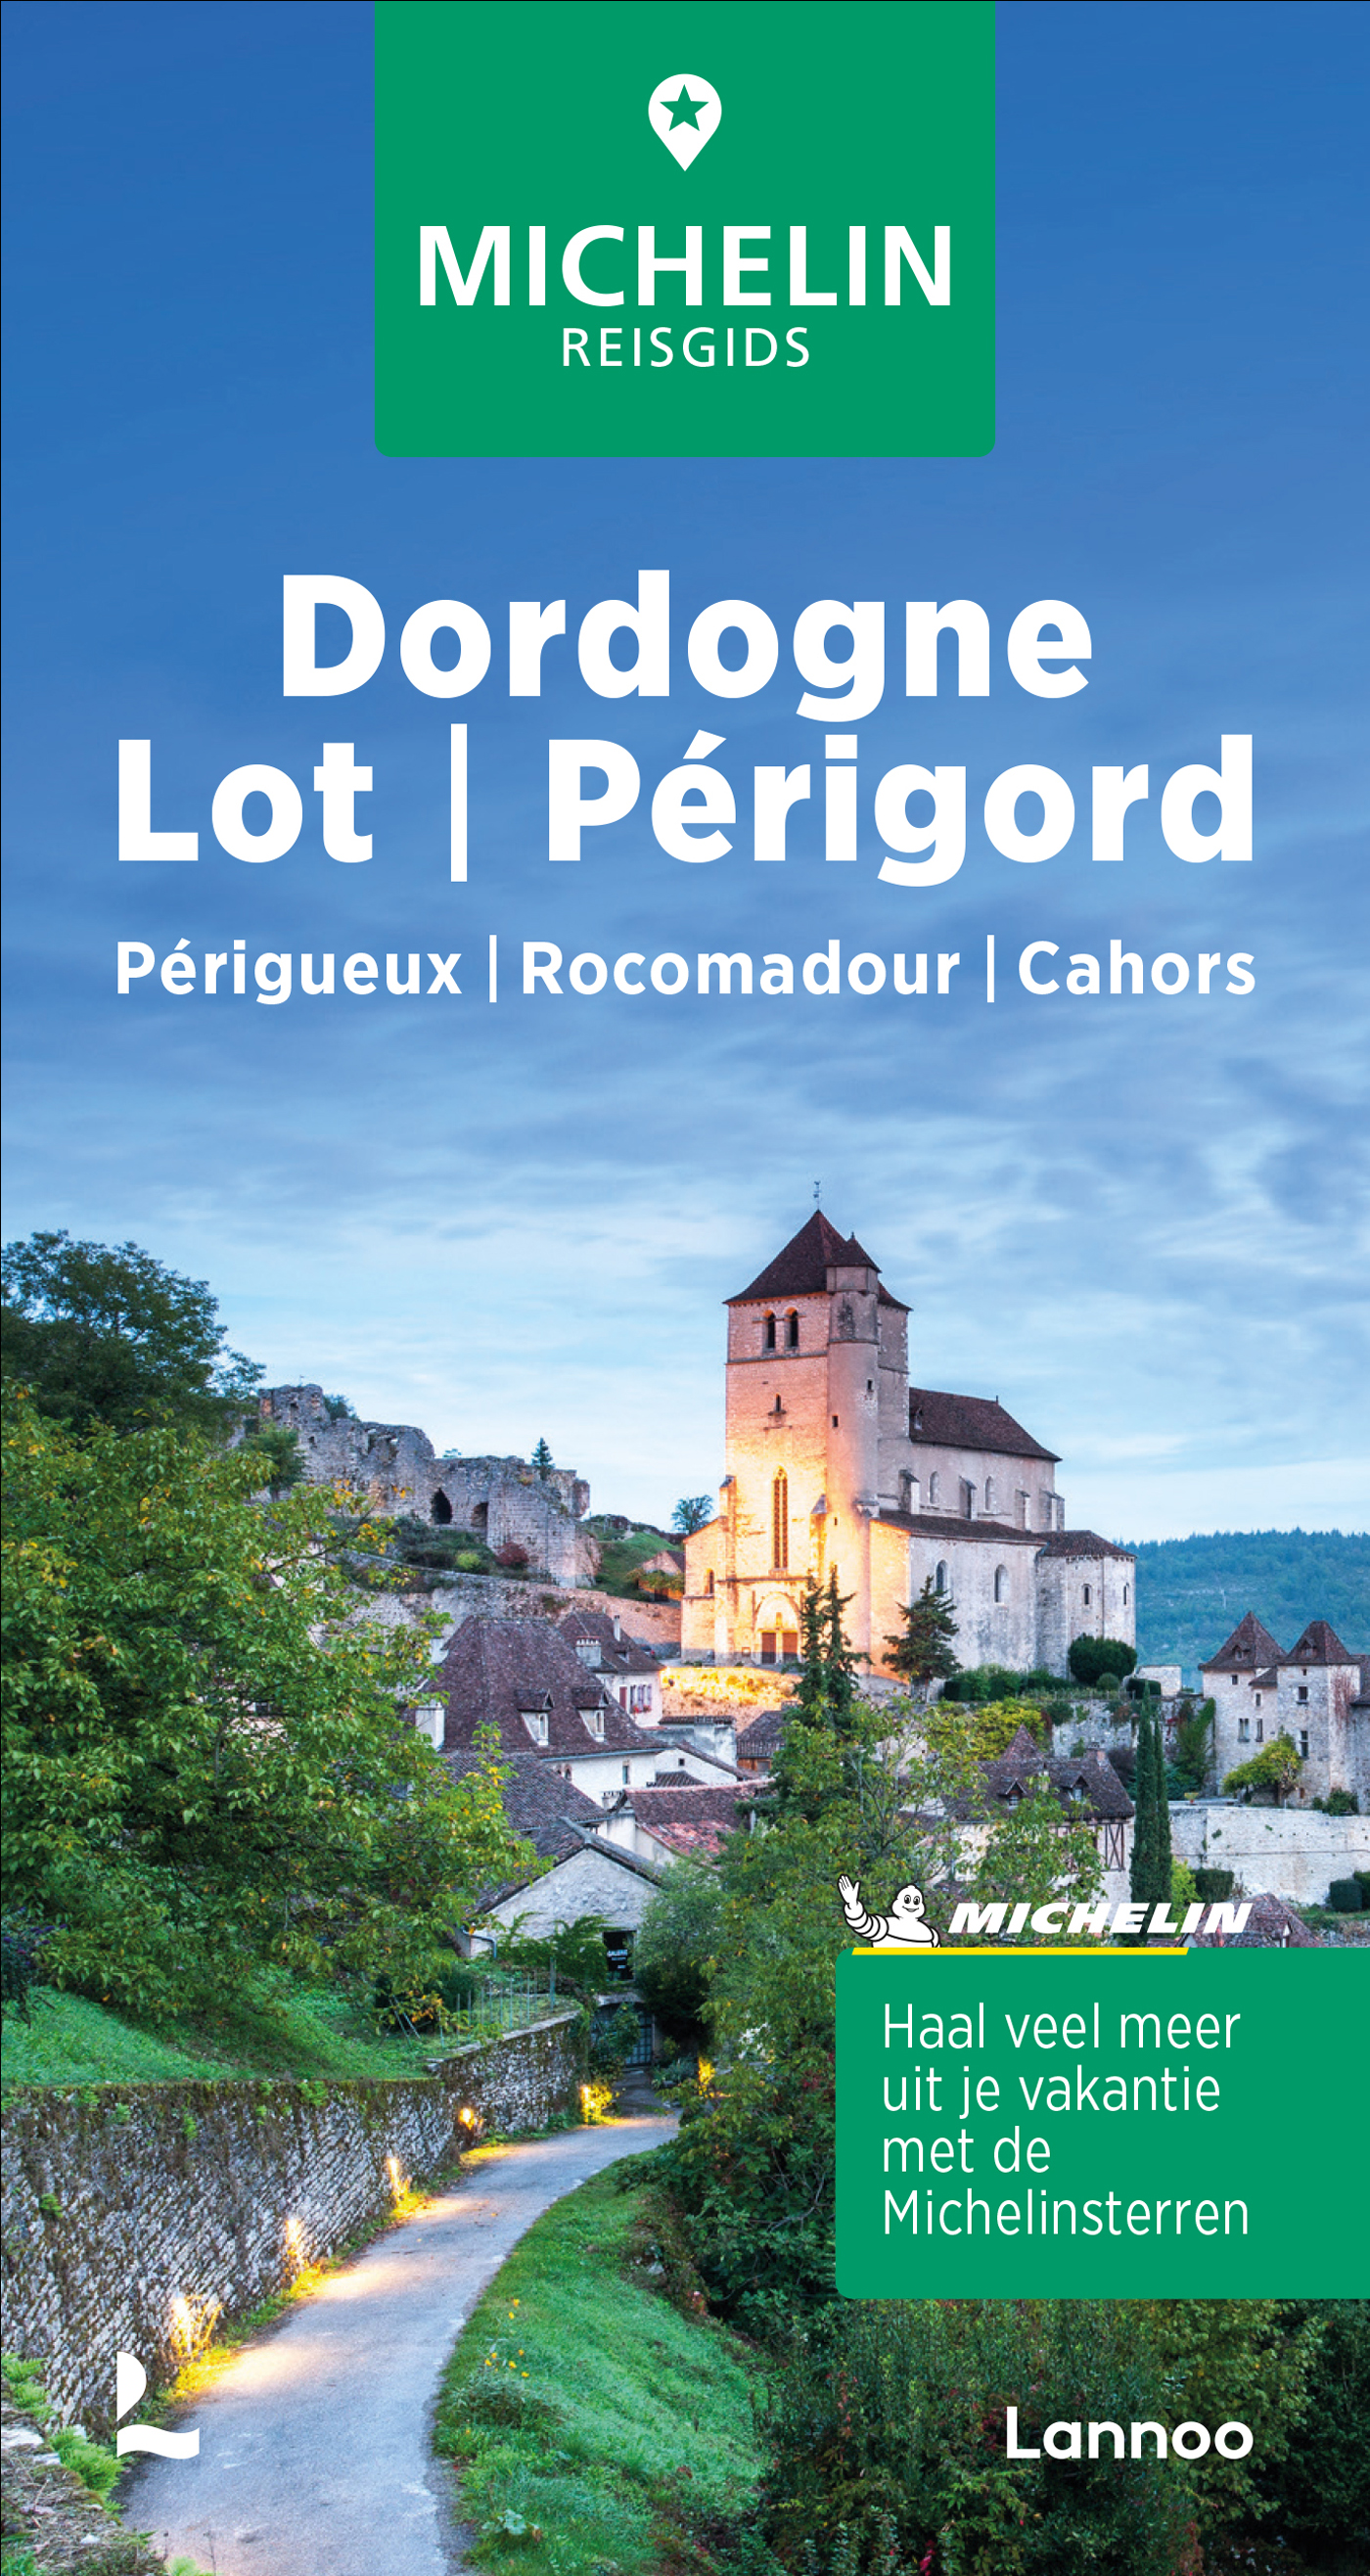 Online bestellen: Reisgids Michelin groene gids Dordogne/ Lot/ Périgord | Lannoo